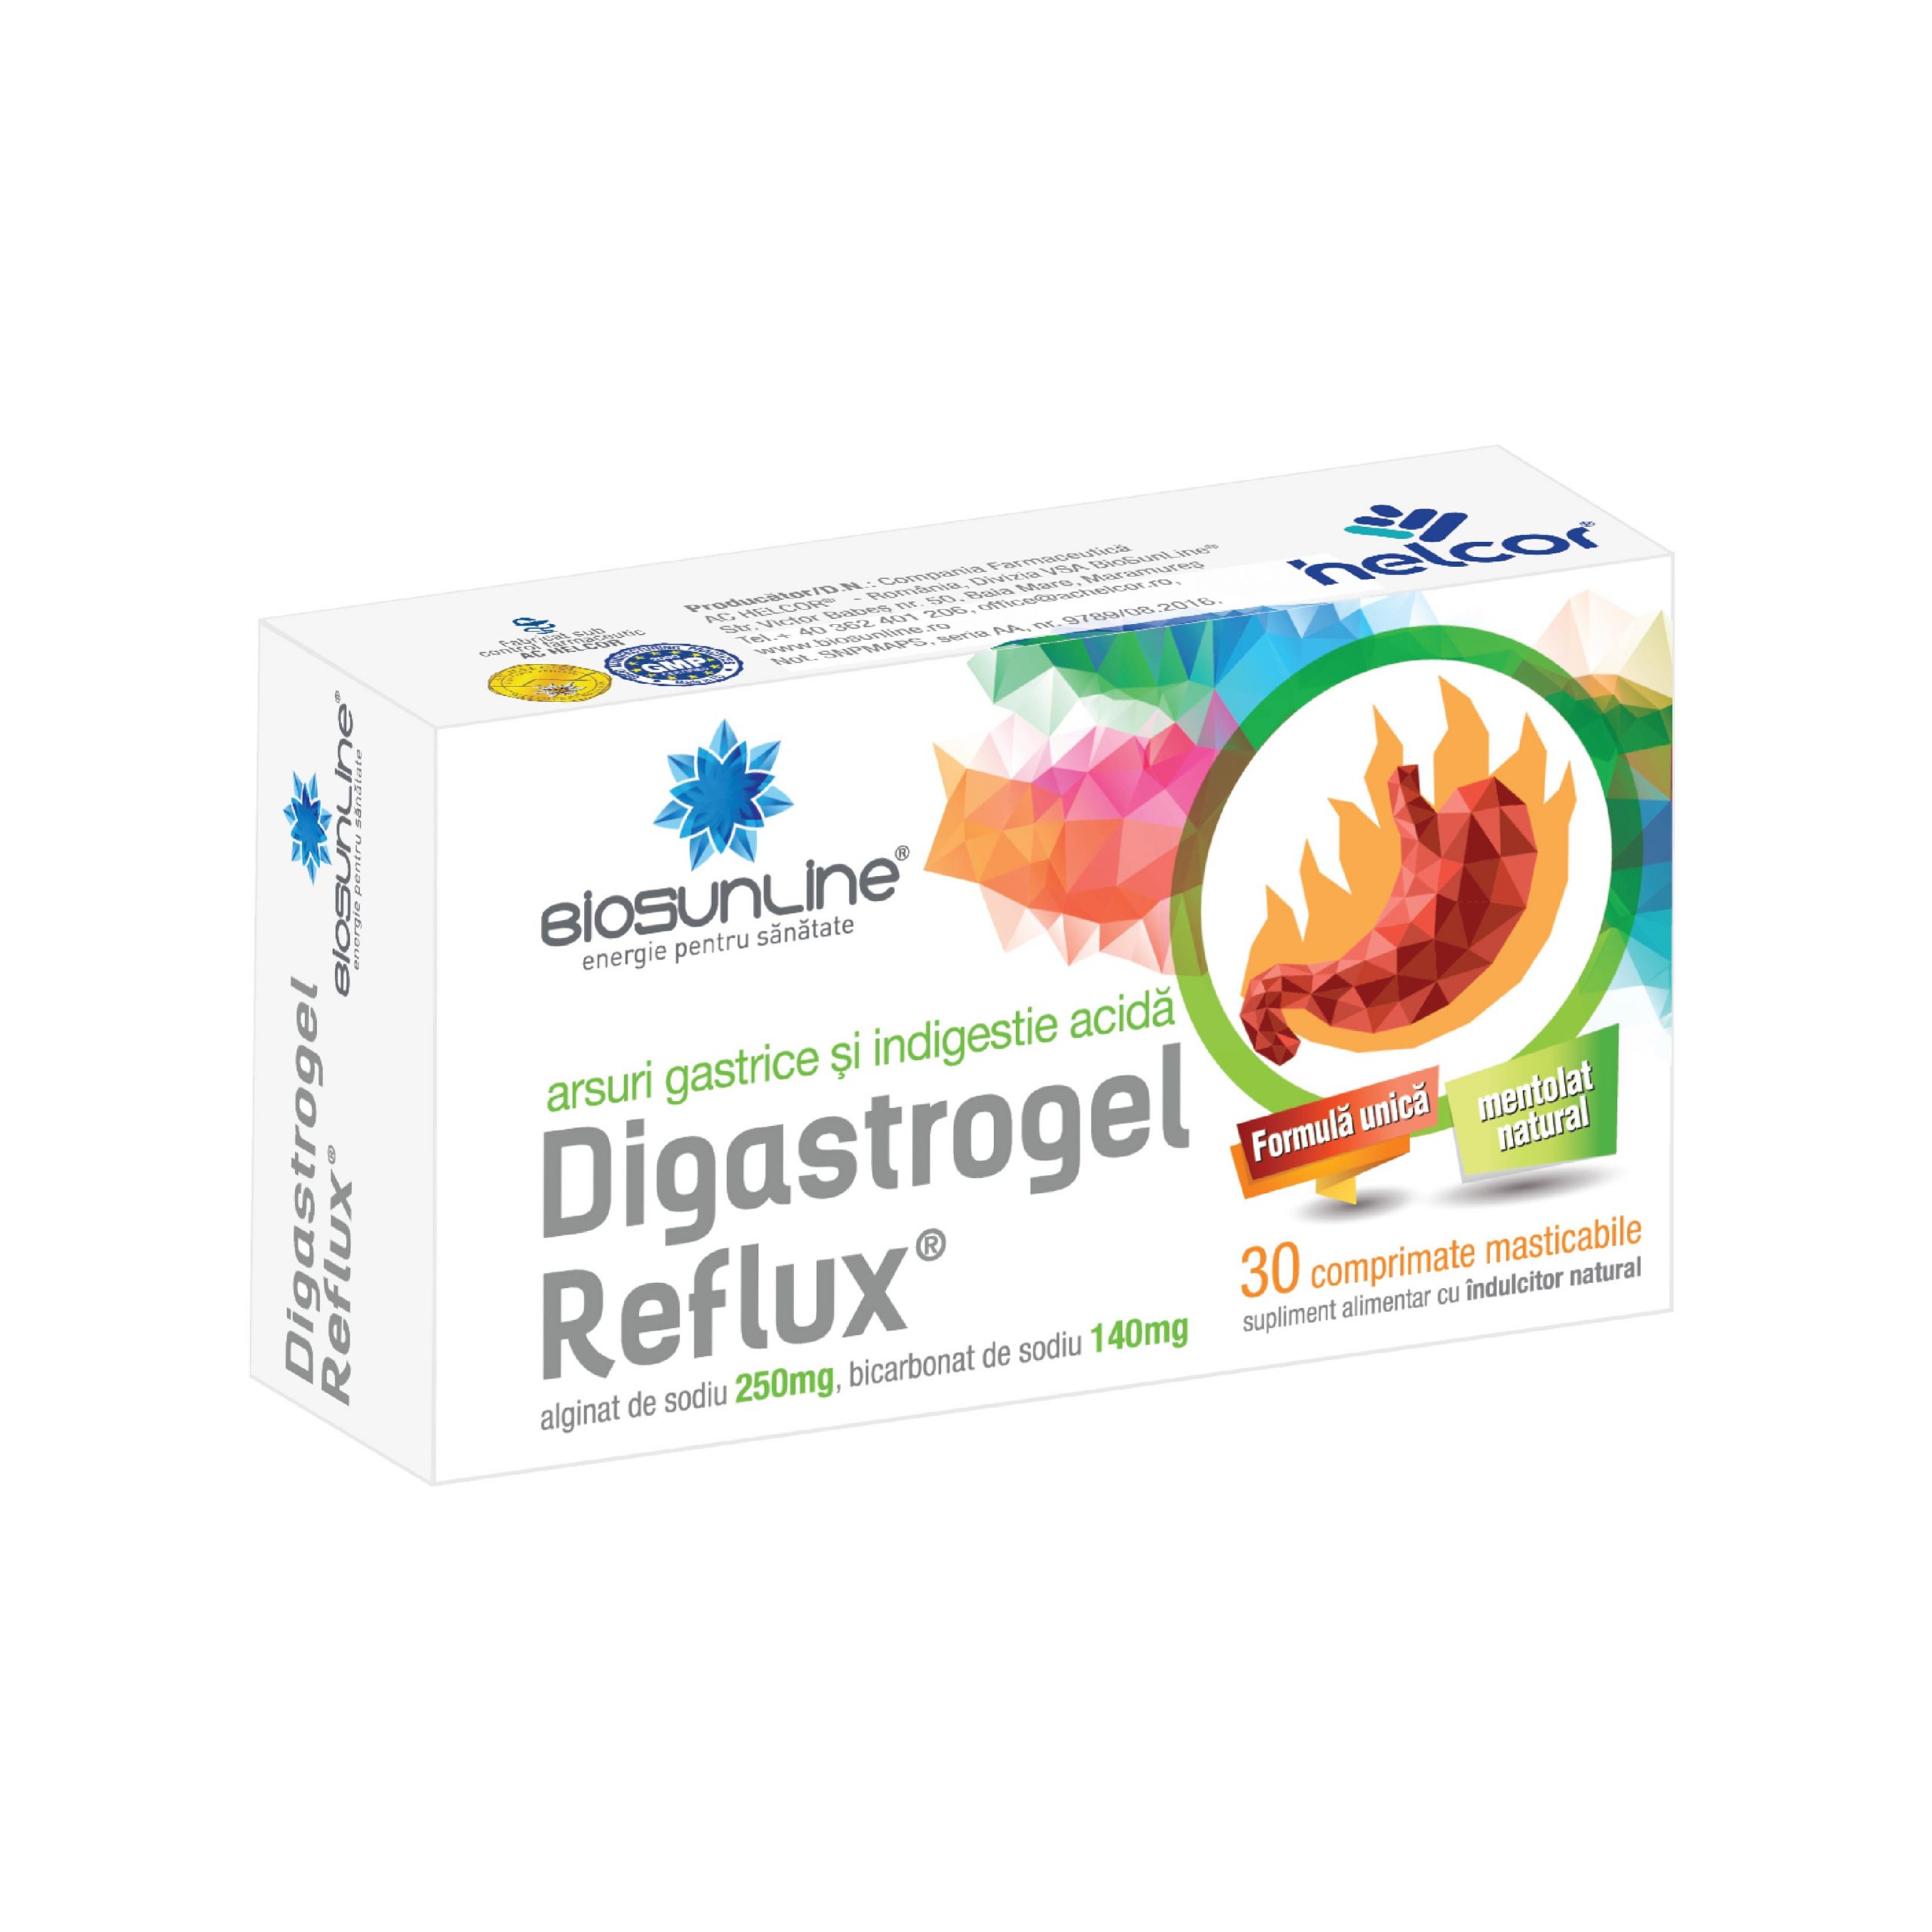 Digastrogel Reflux, 30 comprimate, Biosunline